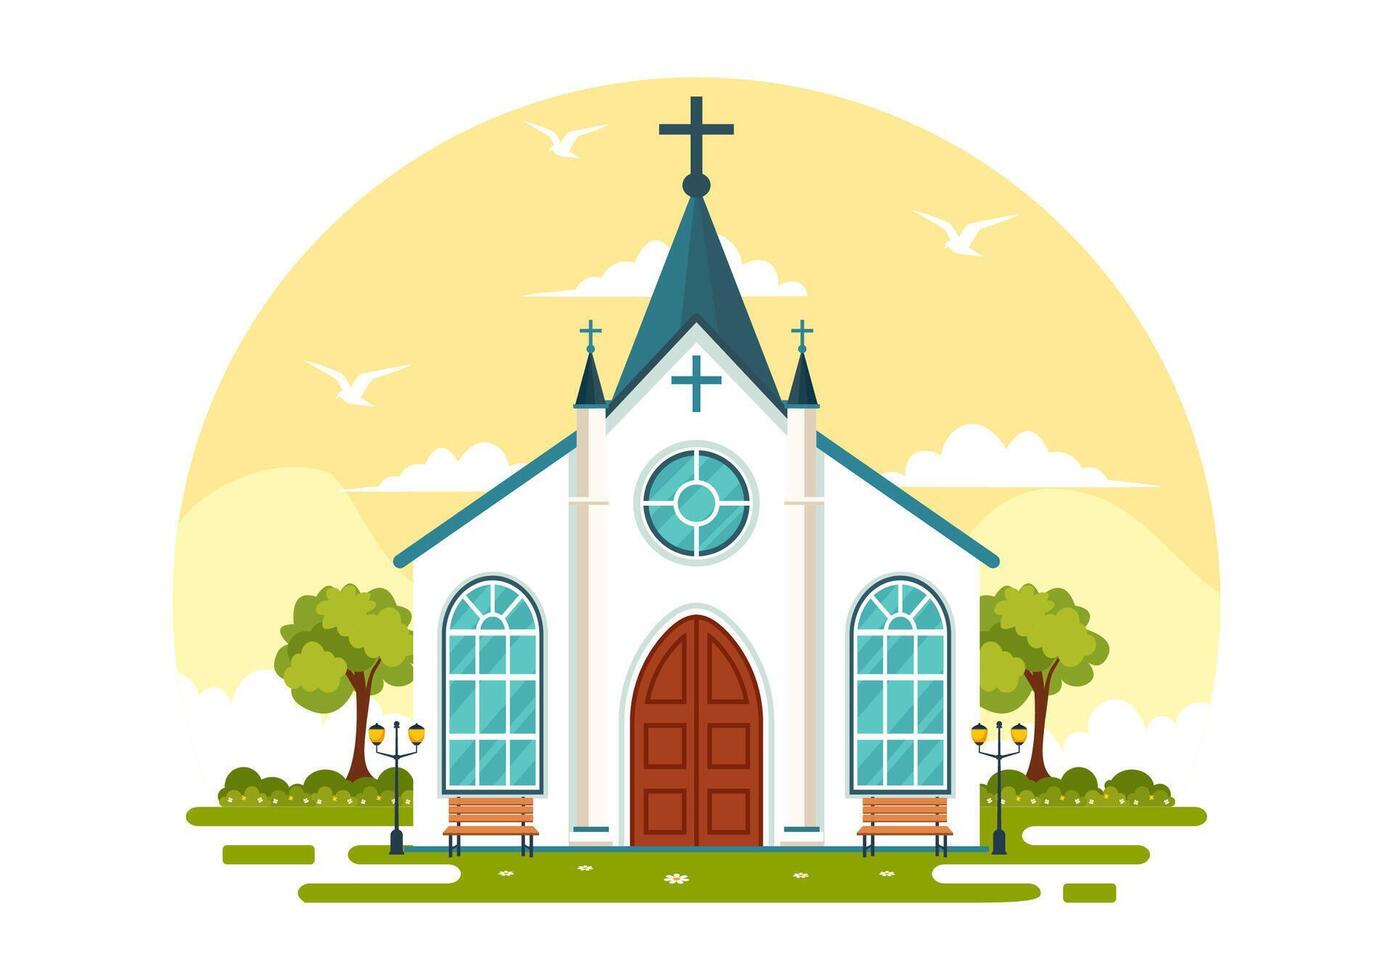 catedral católico Iglesia edificio vector ilustración con arquitectura, medieval y moderno iglesias interior diseño en plano dibujos animados antecedentes